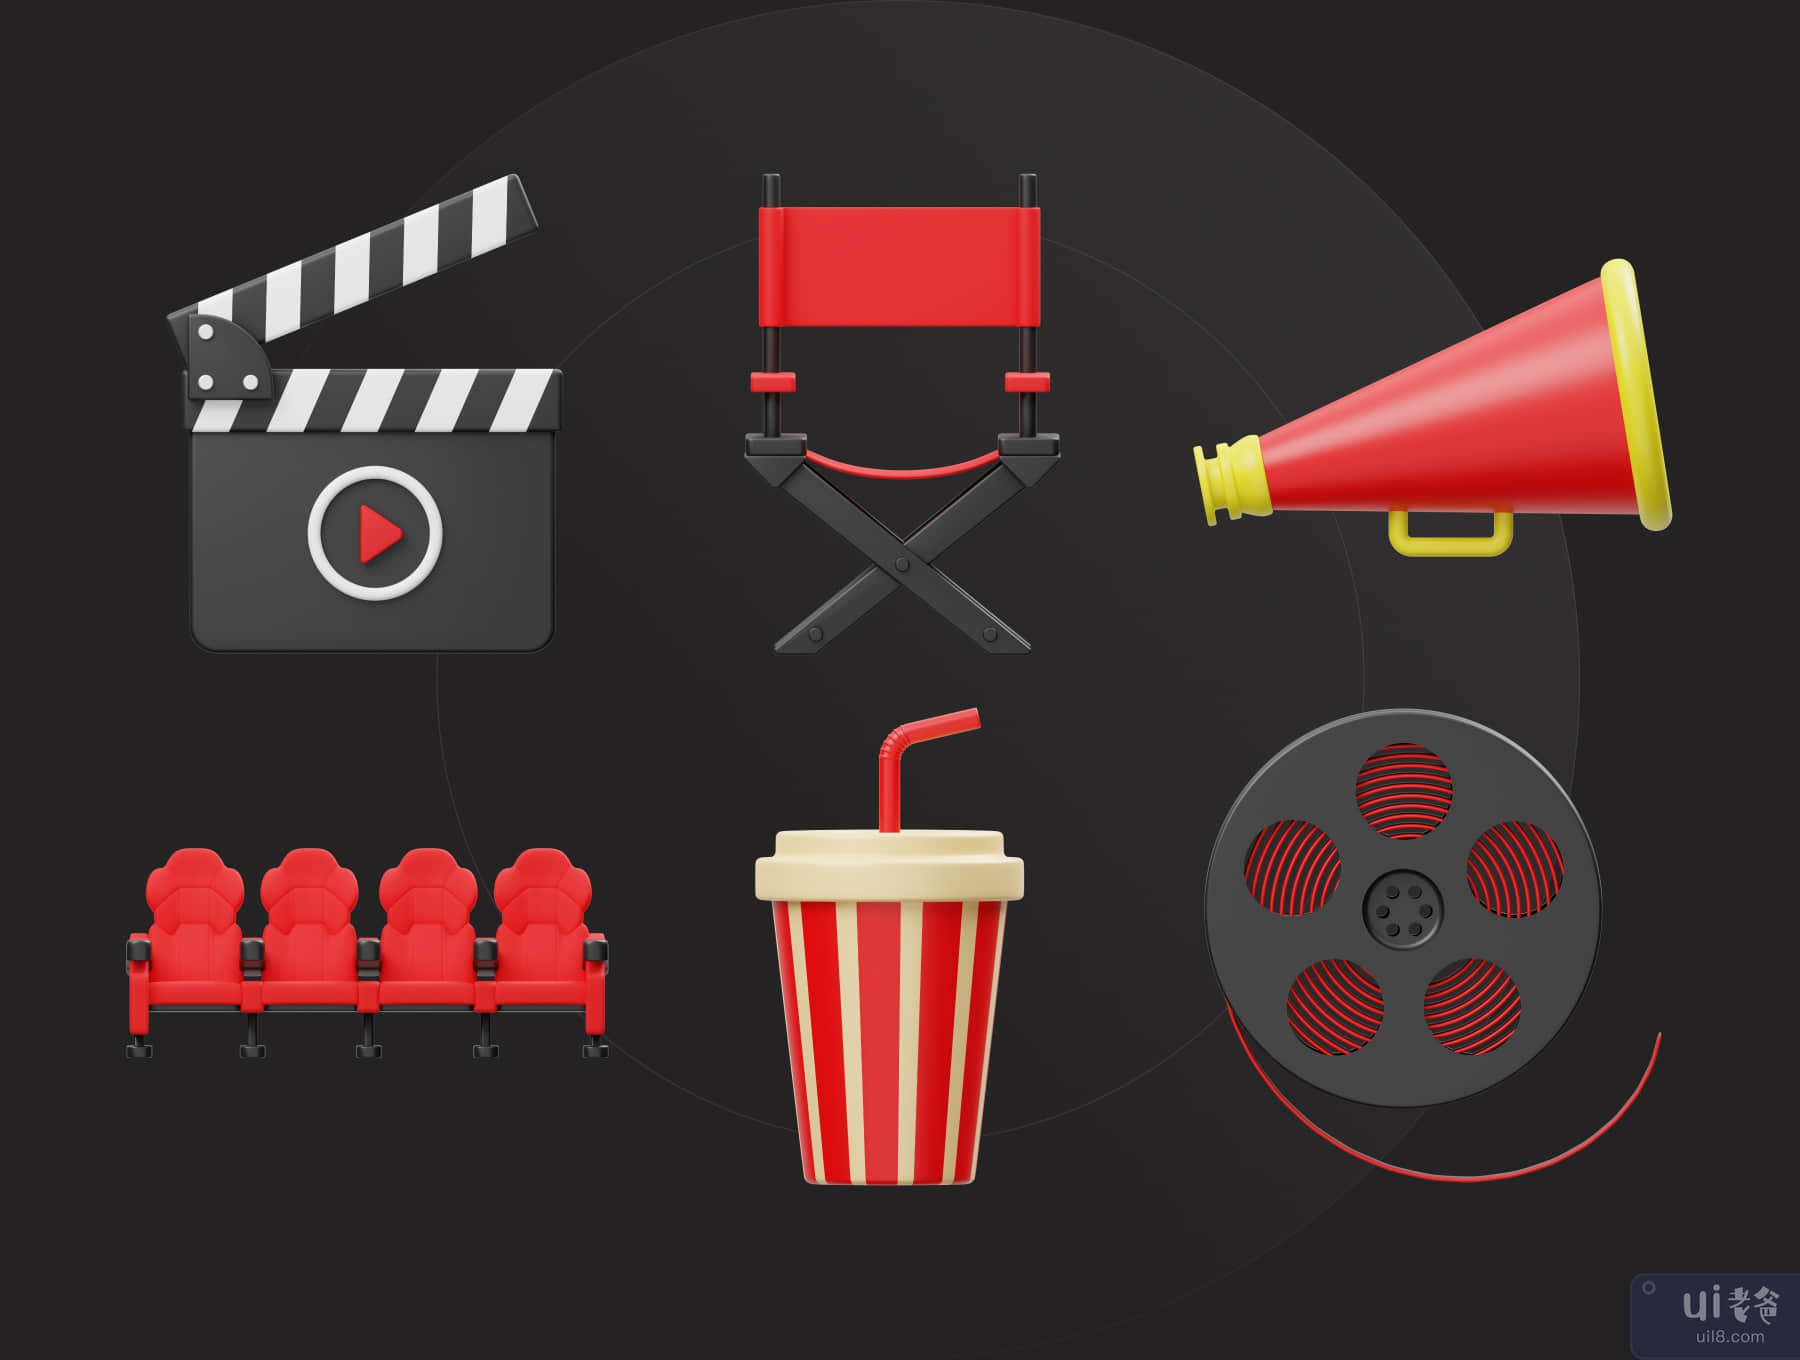 电影院和电影 3D 图标 (Cinema and Movie 3D Icon)插图